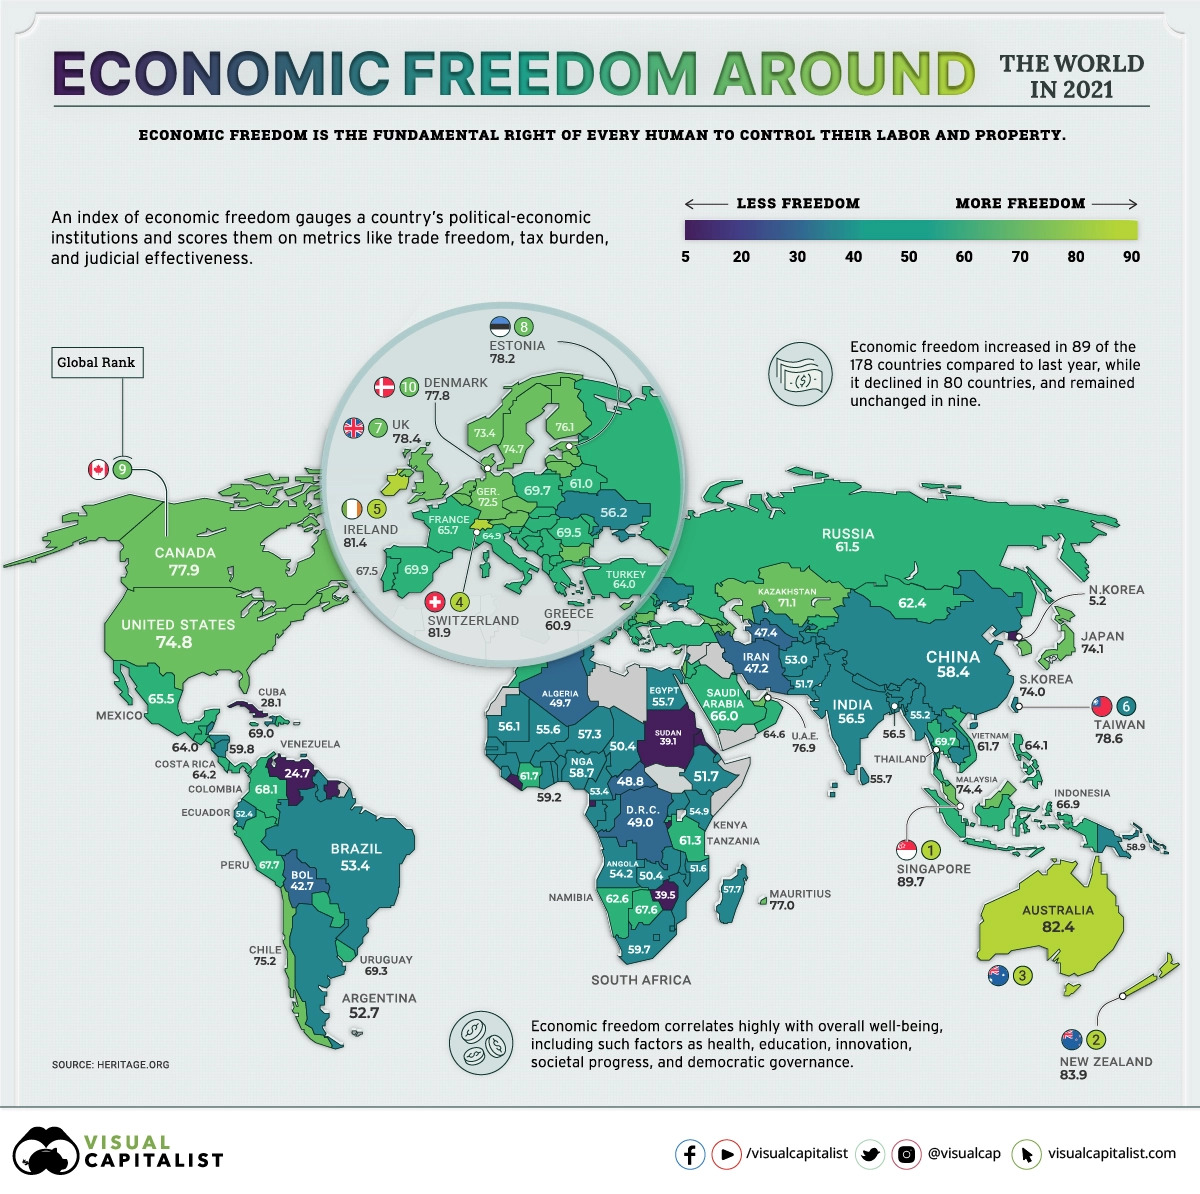 VC-OC-Economic-Freedom-Around-the-World-in-2021.jpg